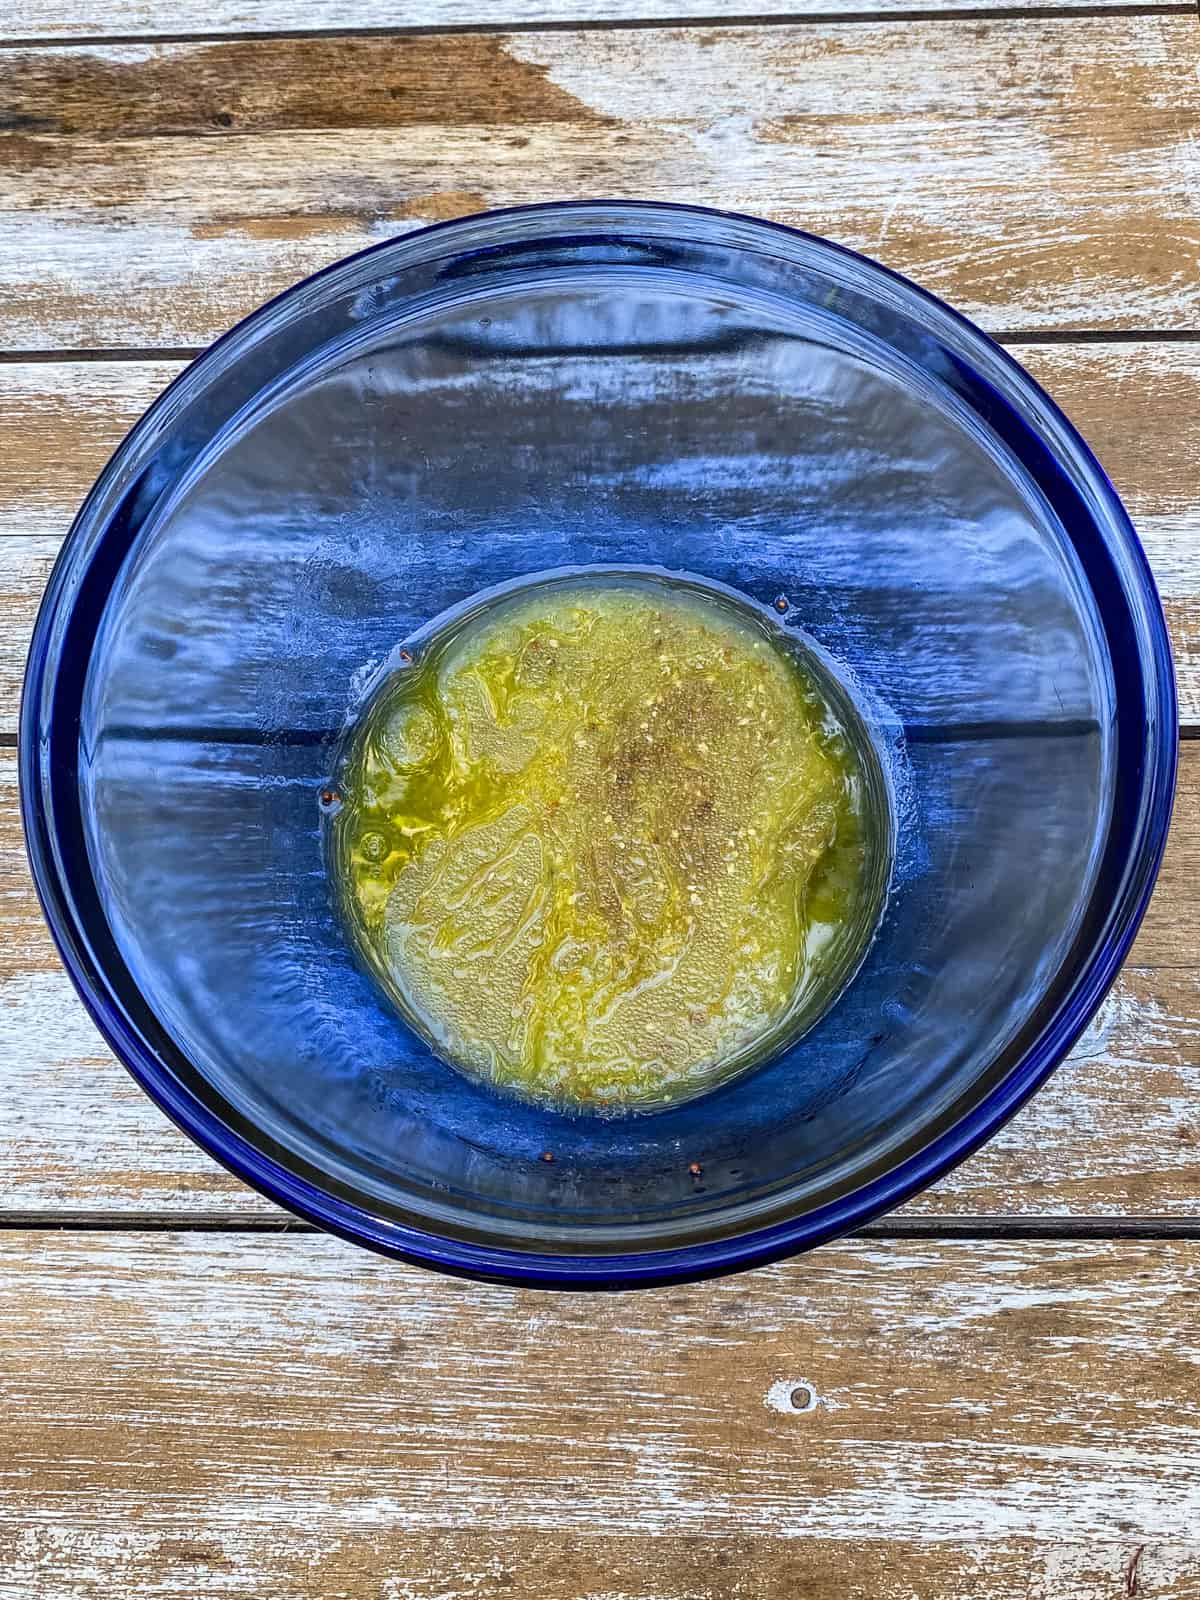 Whisk the mustard vinaigrette in the bottom of a bowl until emulsified.